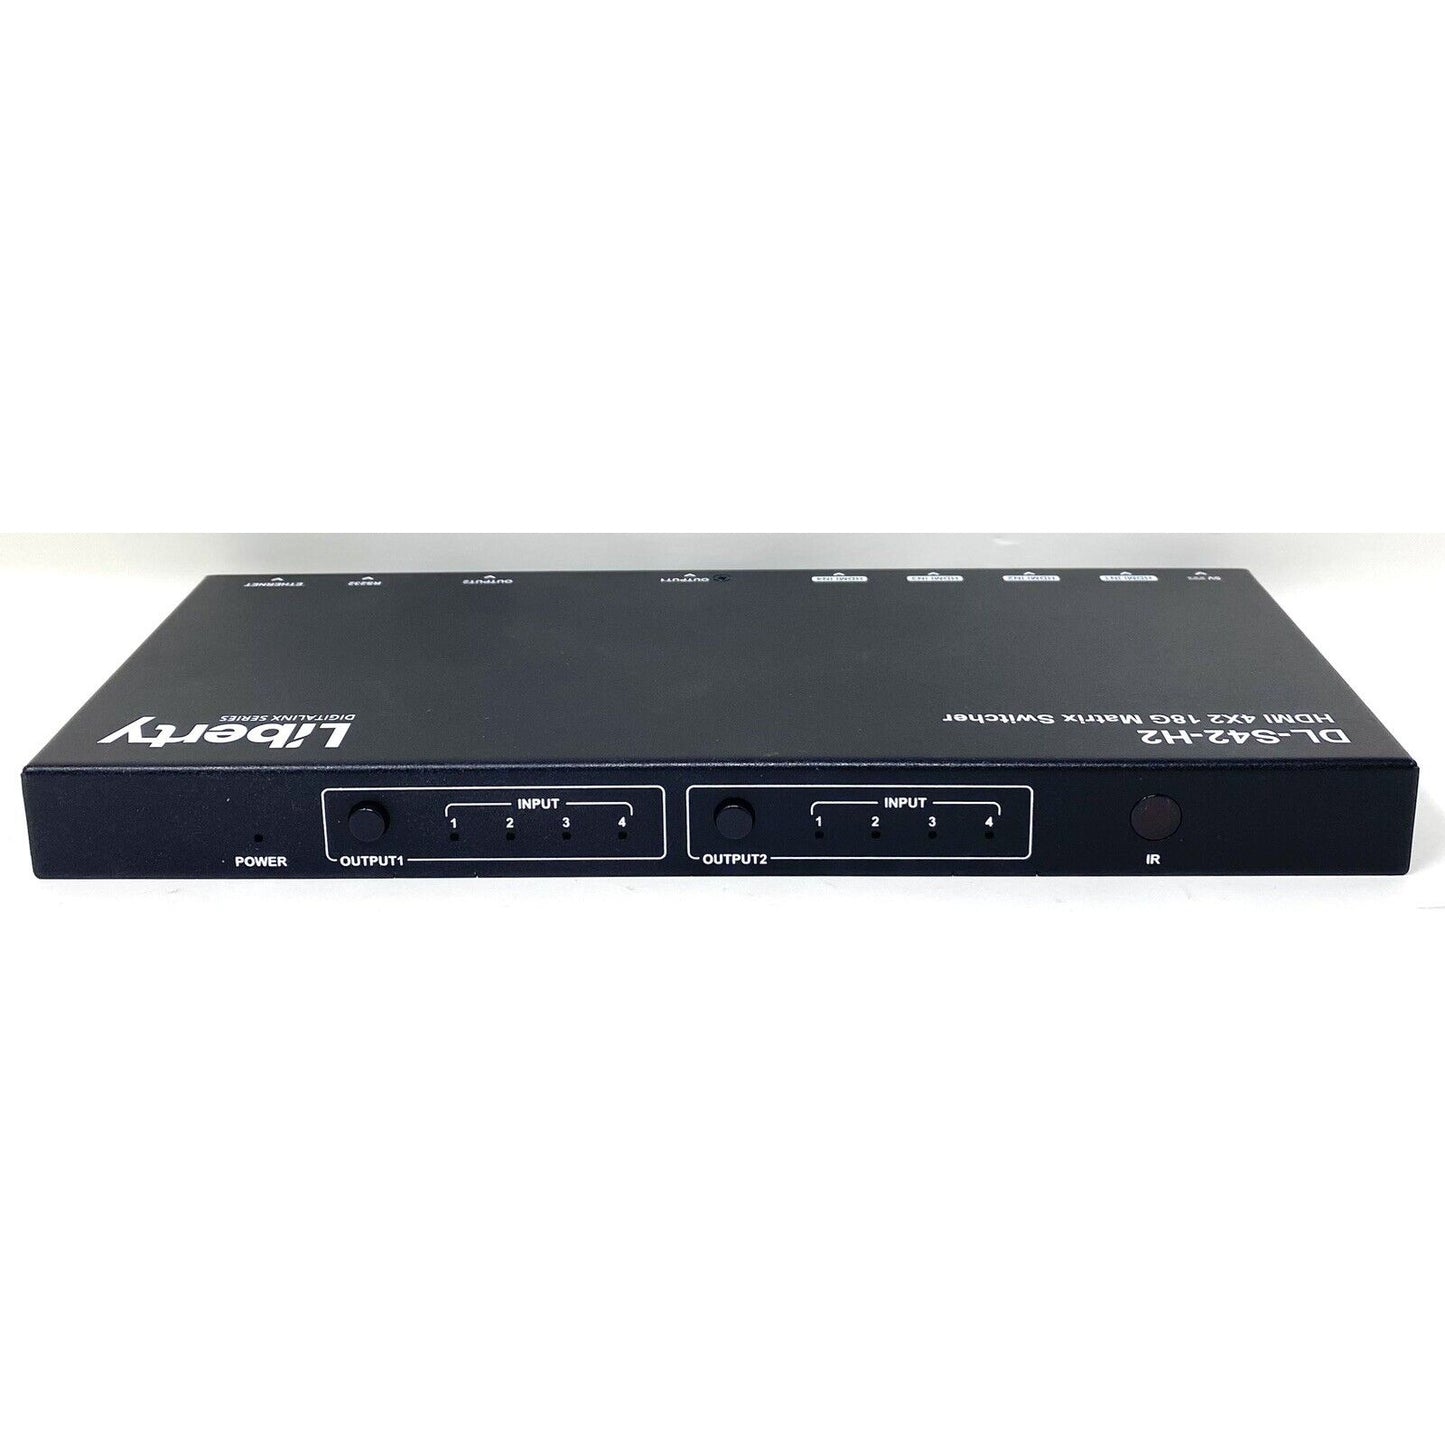 Liberty Digitalinx DL-S42-H2 4x2 HDMI 2.0 Matrix Switch w/ARC